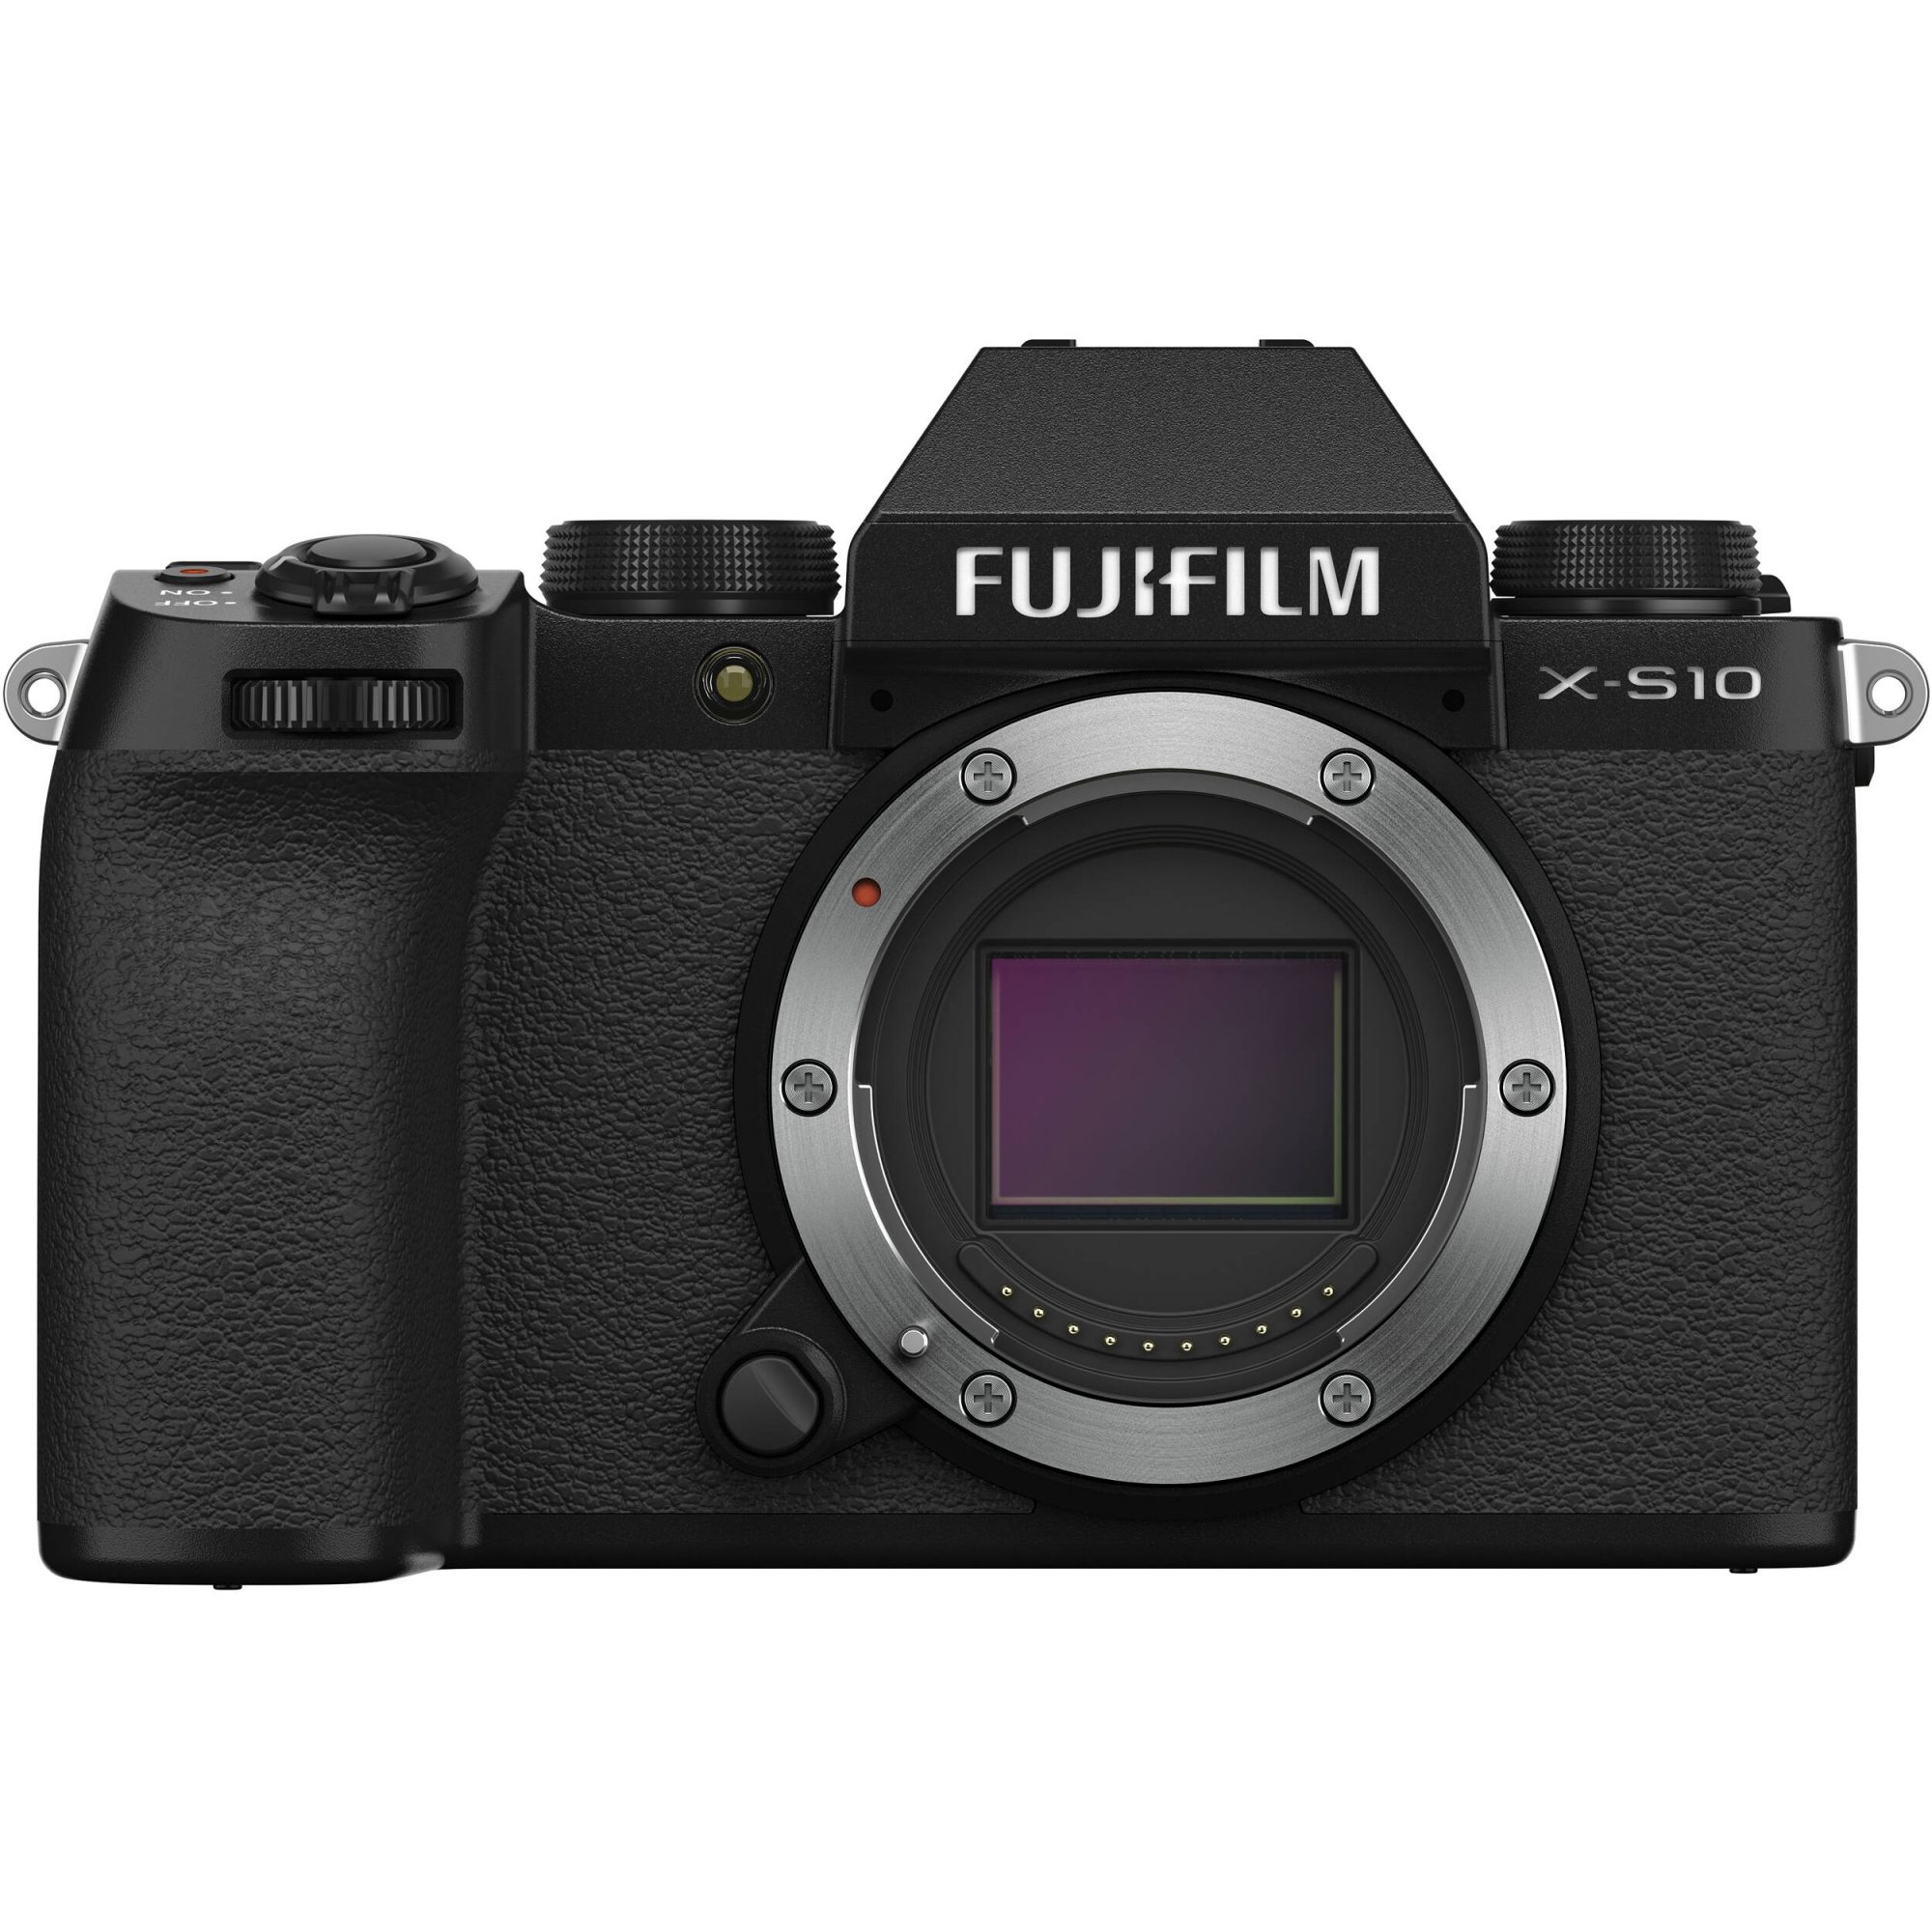 Fujifilm X-S10 camera manual download 